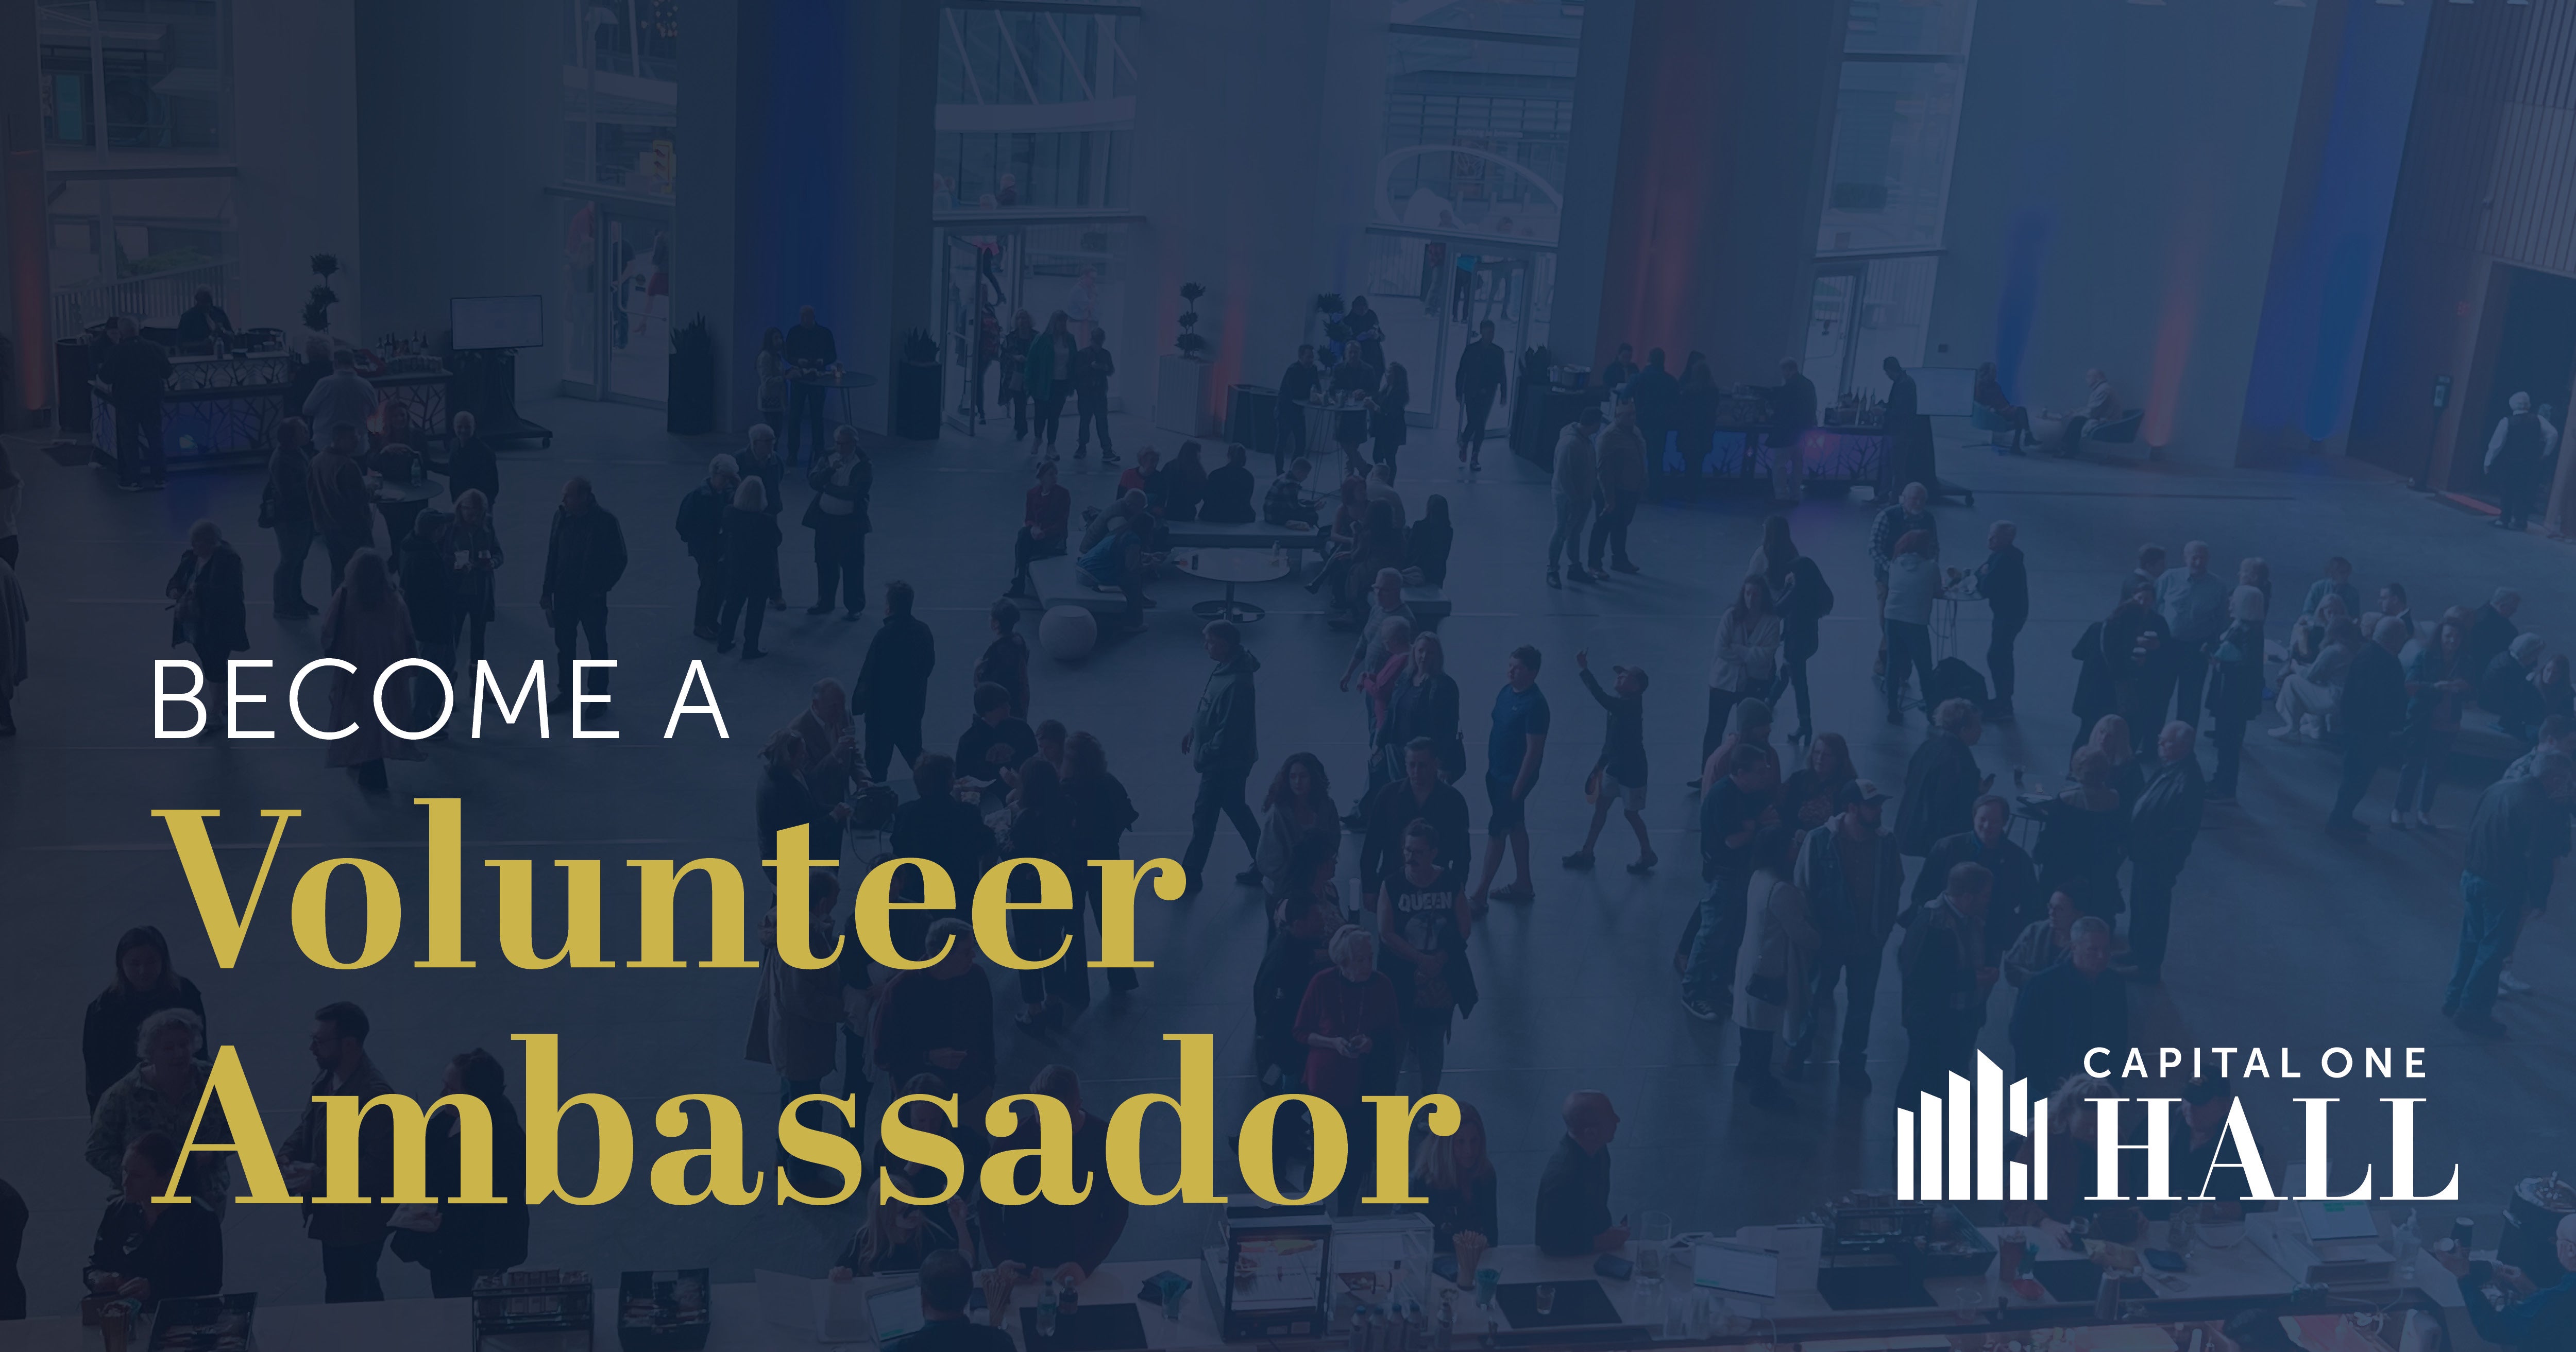 COH-Blog-Volunteer Ambassador.jpg